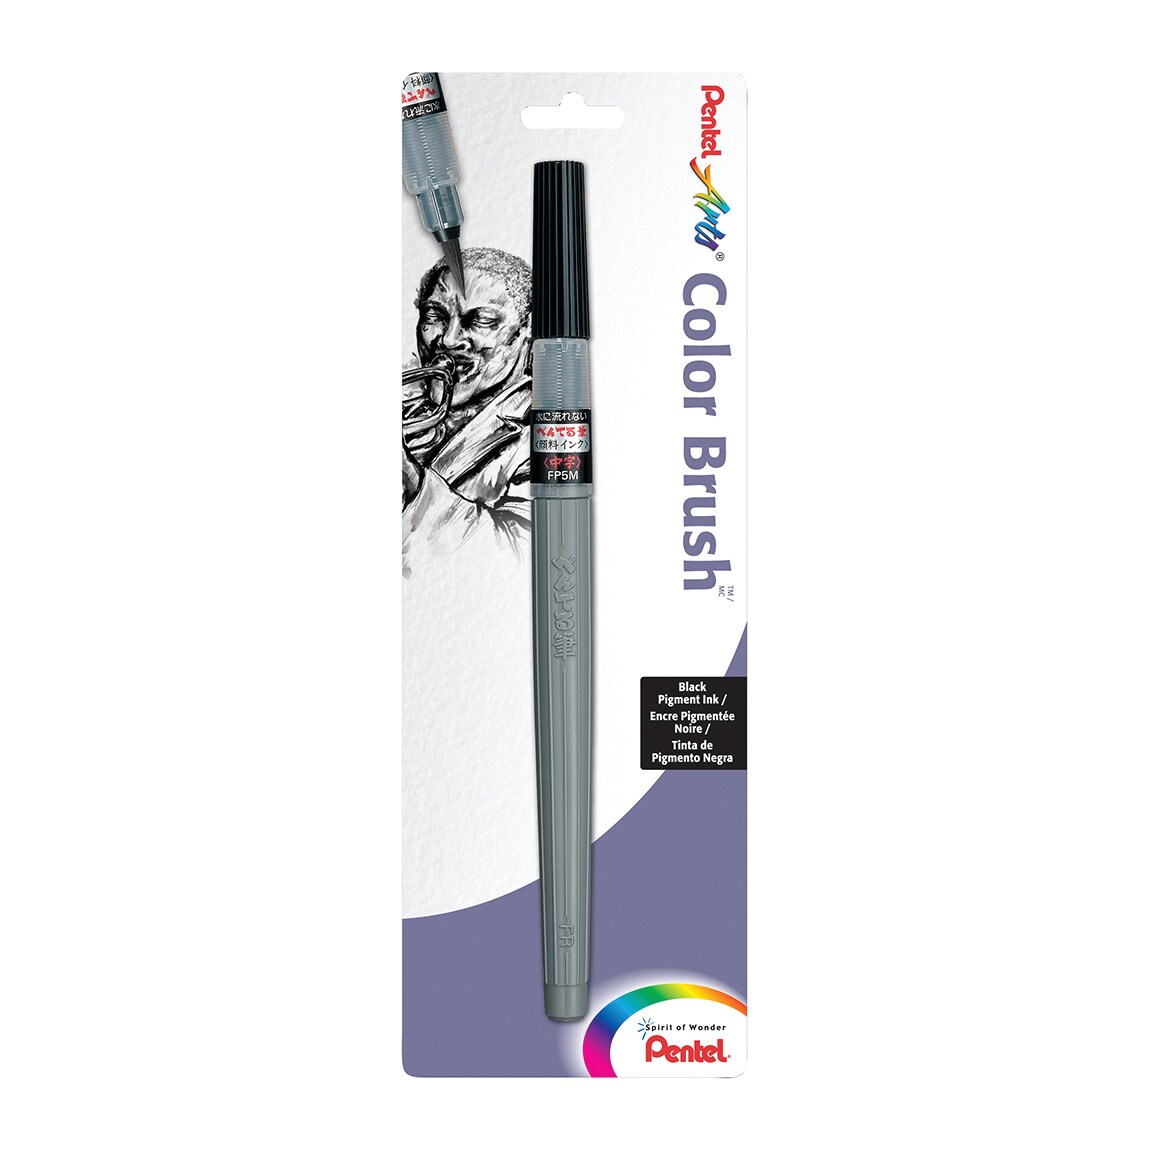 Pentel Color Brush Pen with Black Pigmented Ink, Medium